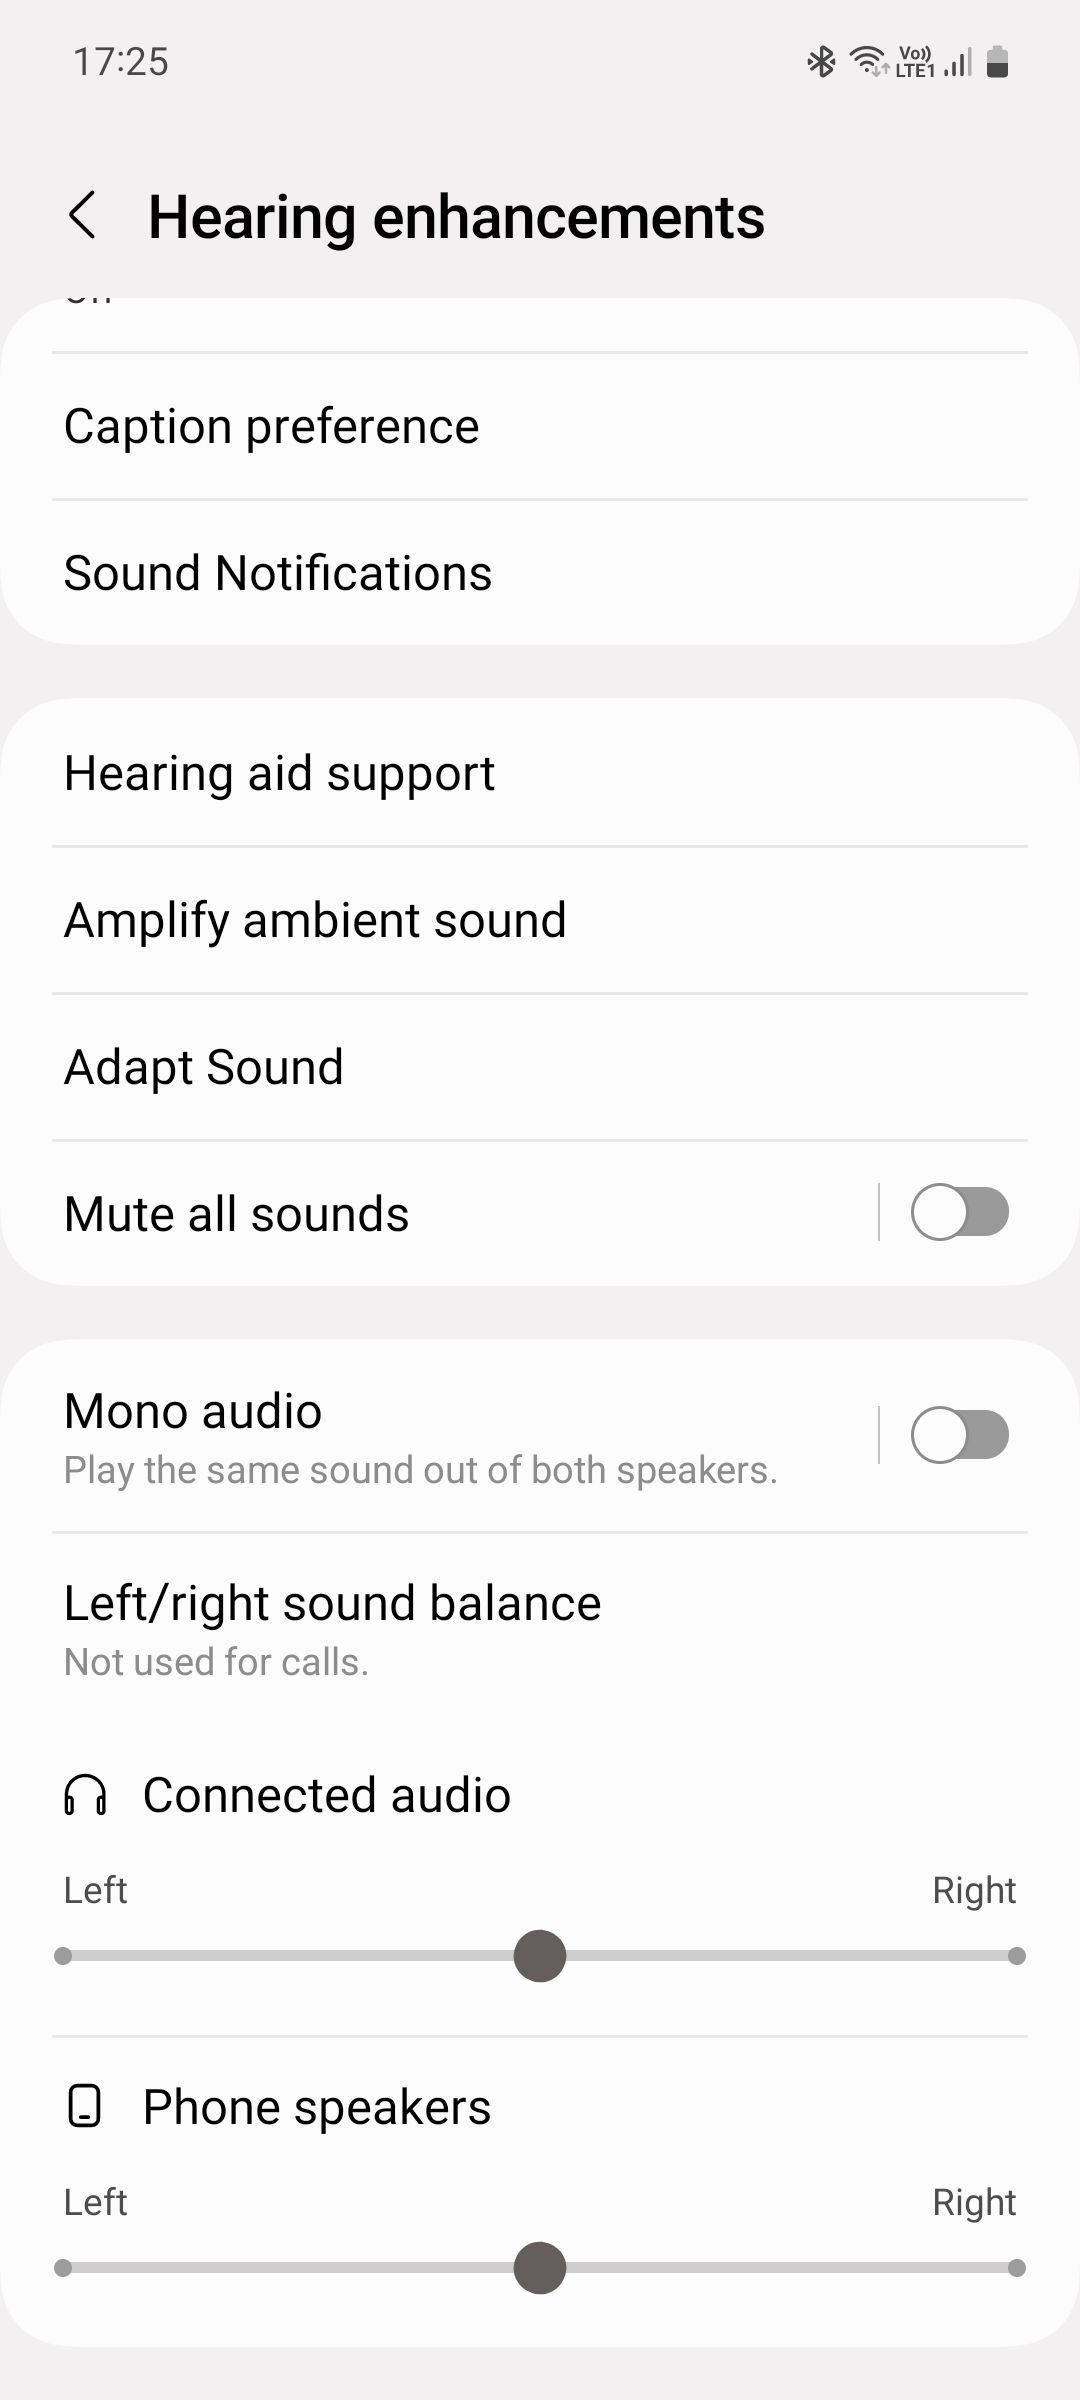 Samsung One UI Hearing enhancements menu